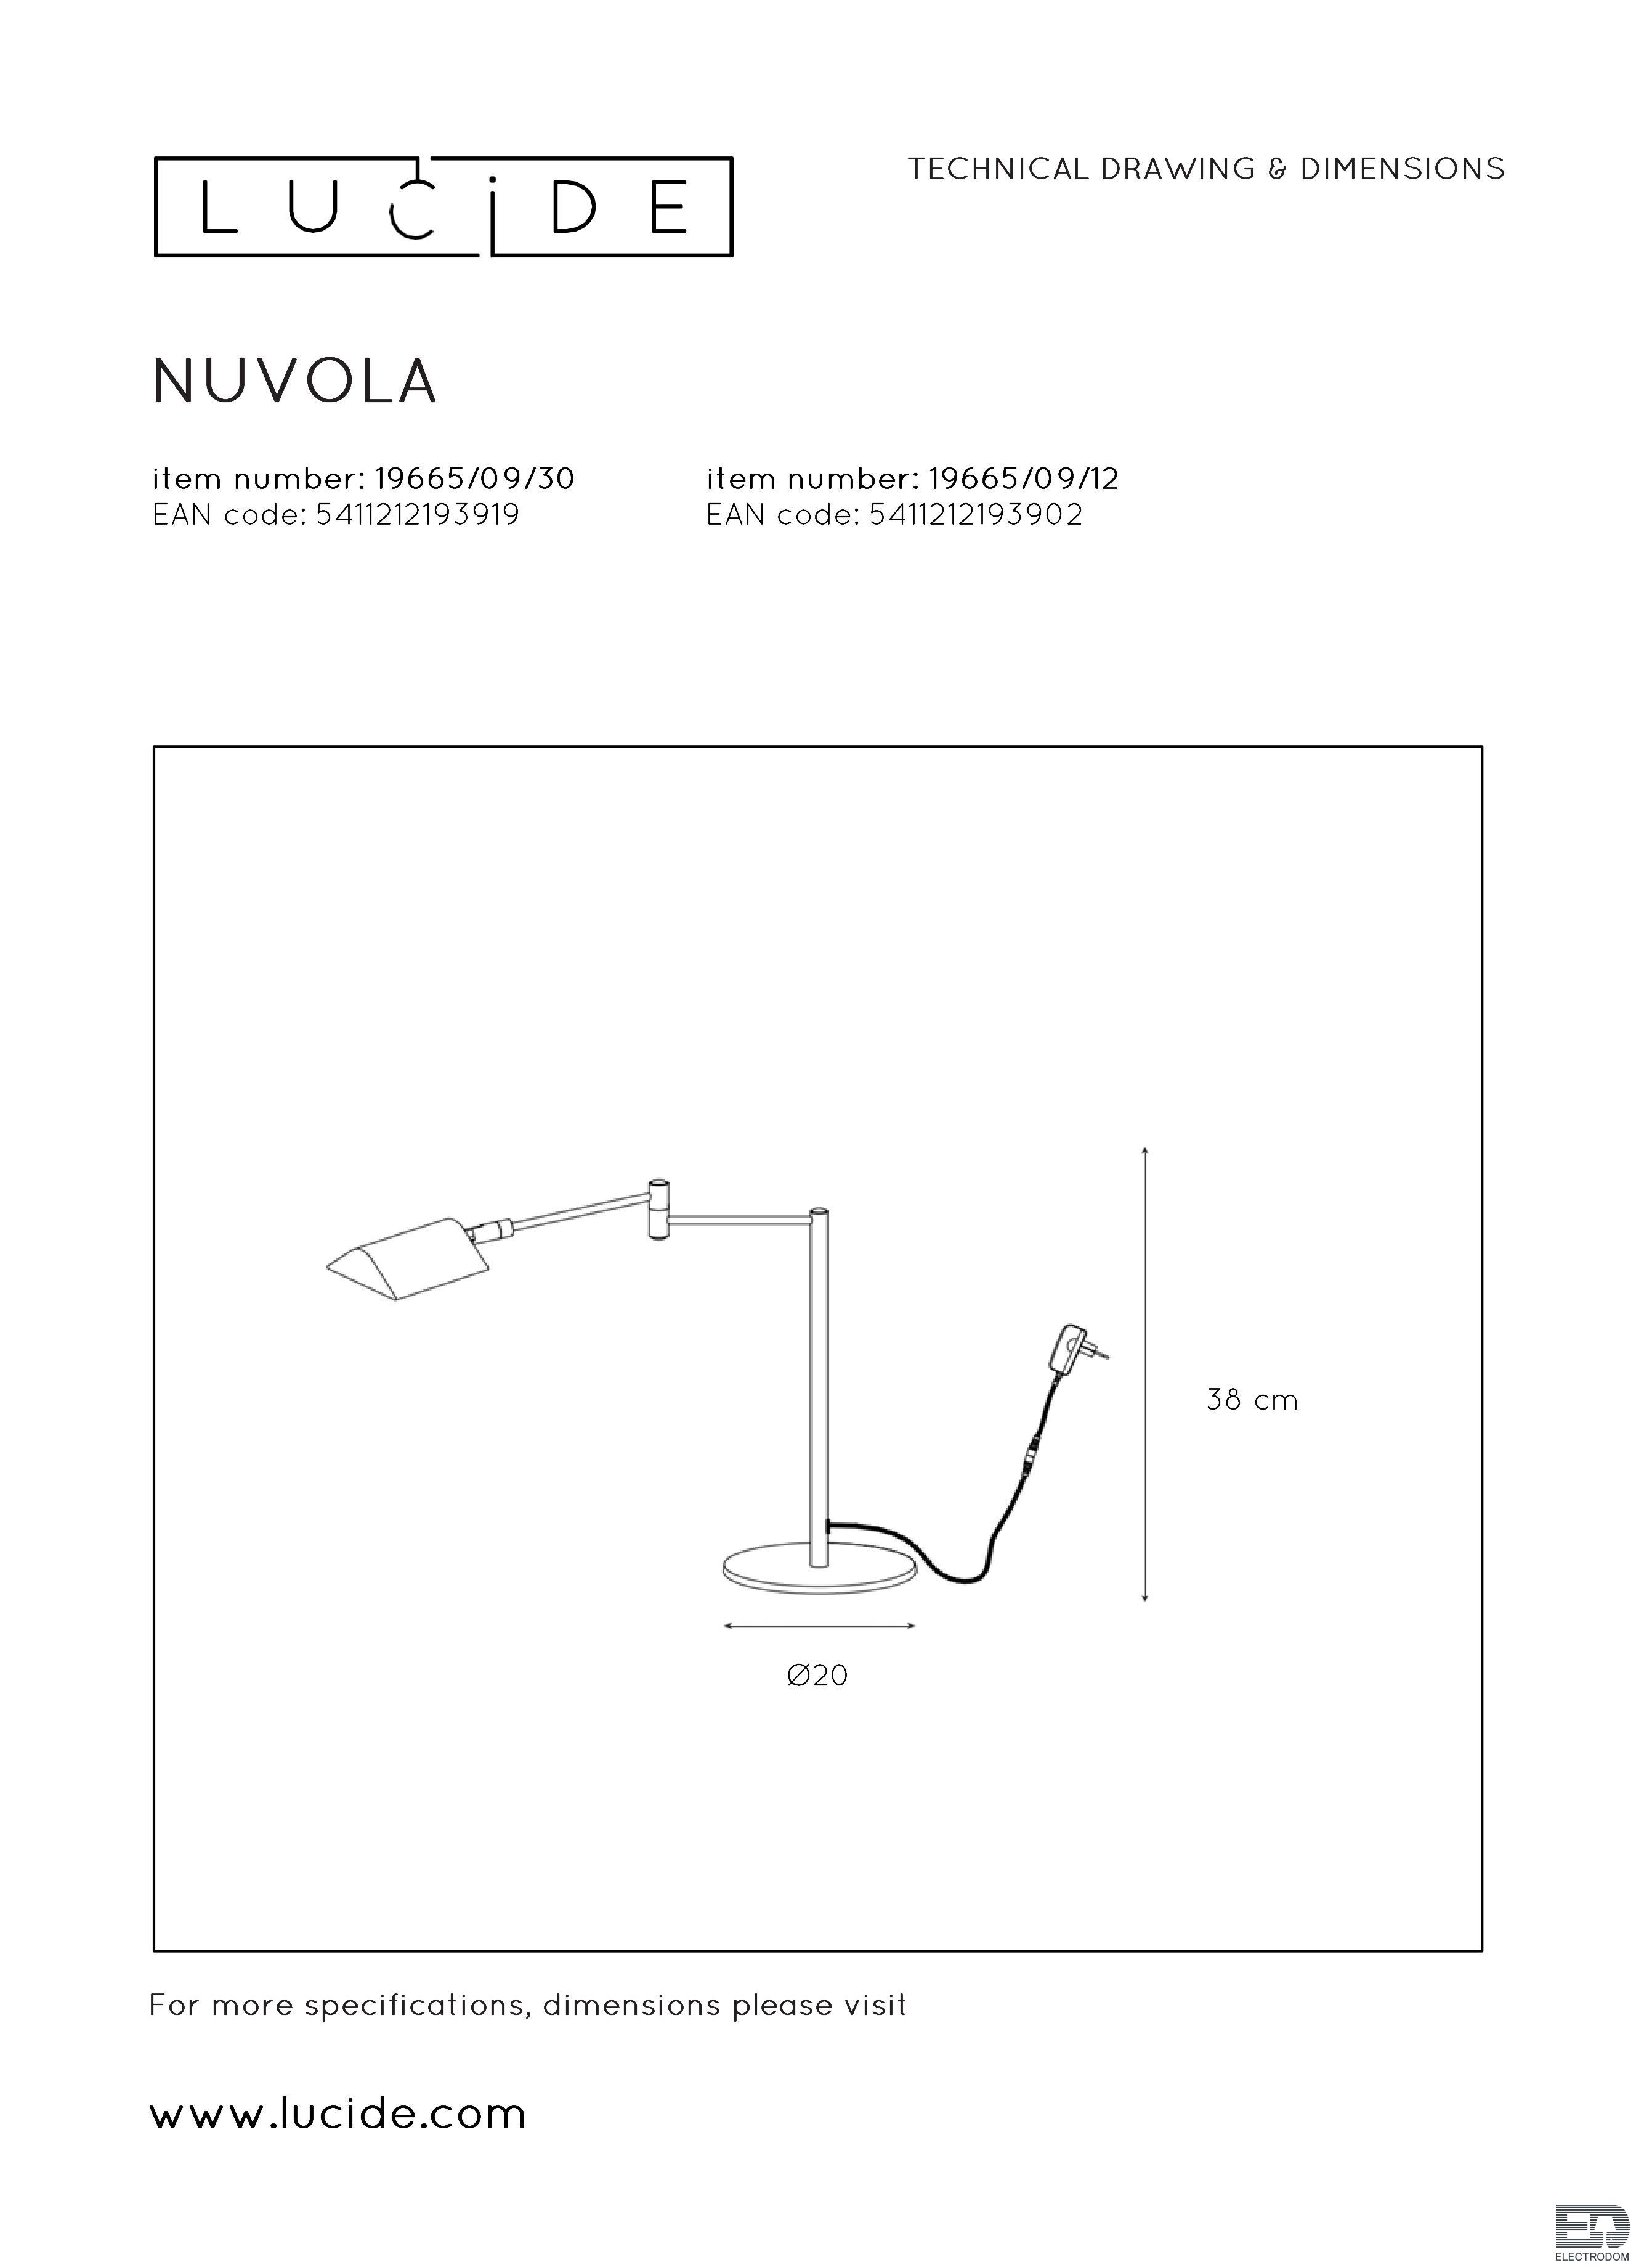 Настольная лампа Lucide Nuvola 19665/09/12 - цена и фото 8